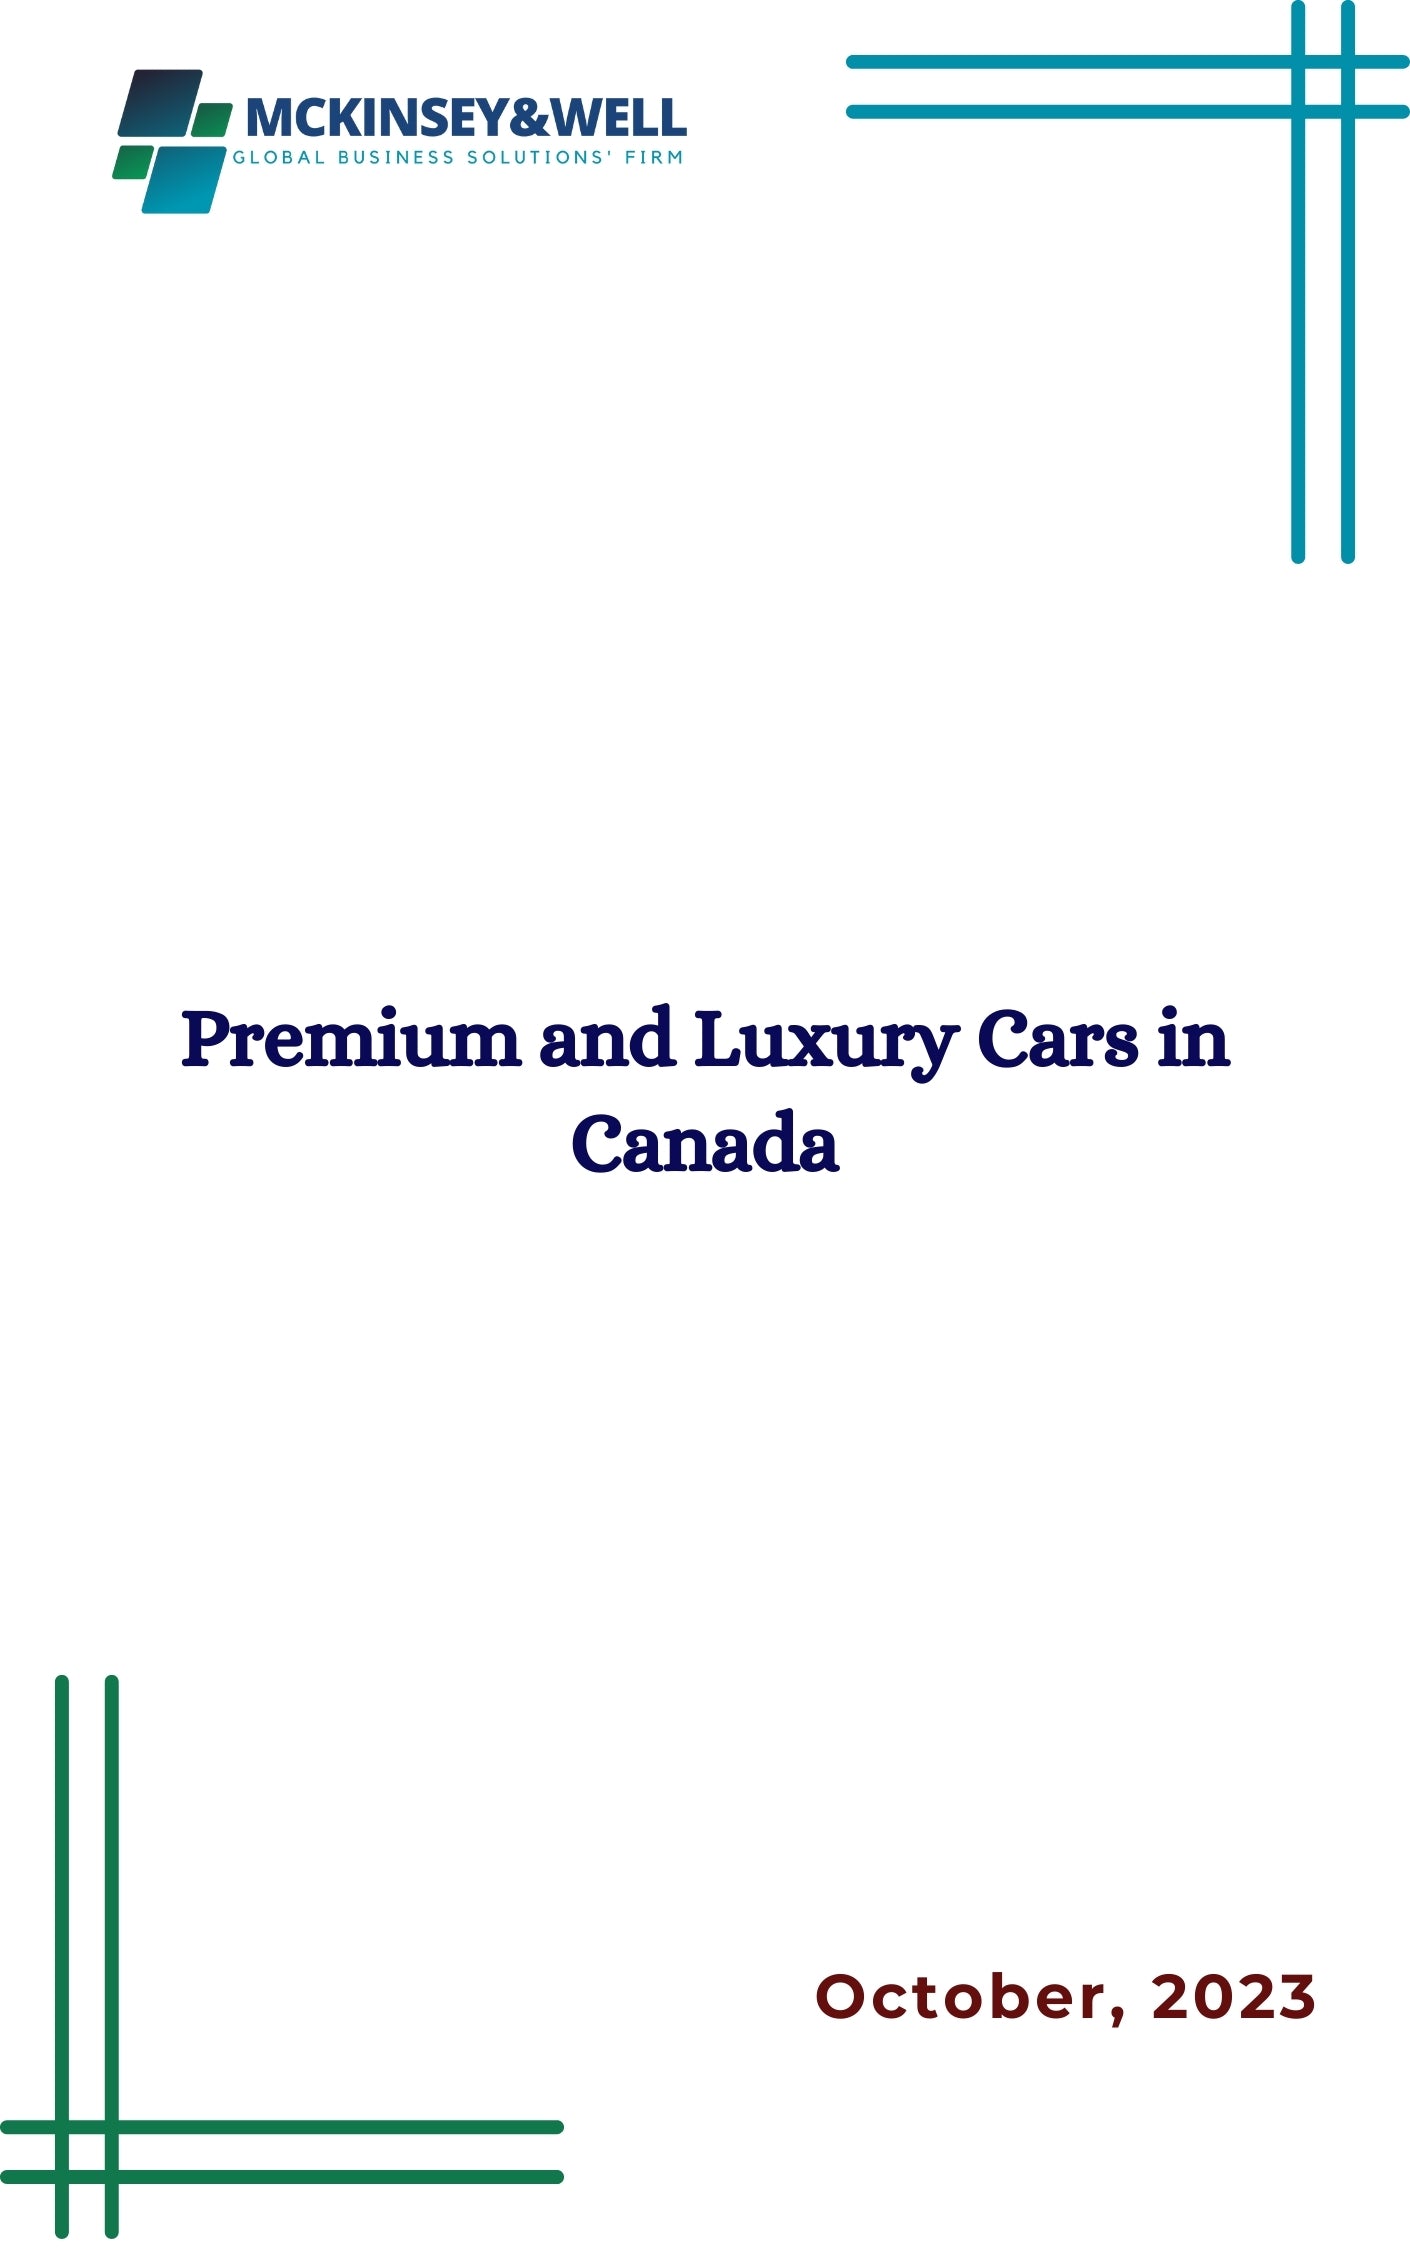 Premium and Luxury Cars in Canada